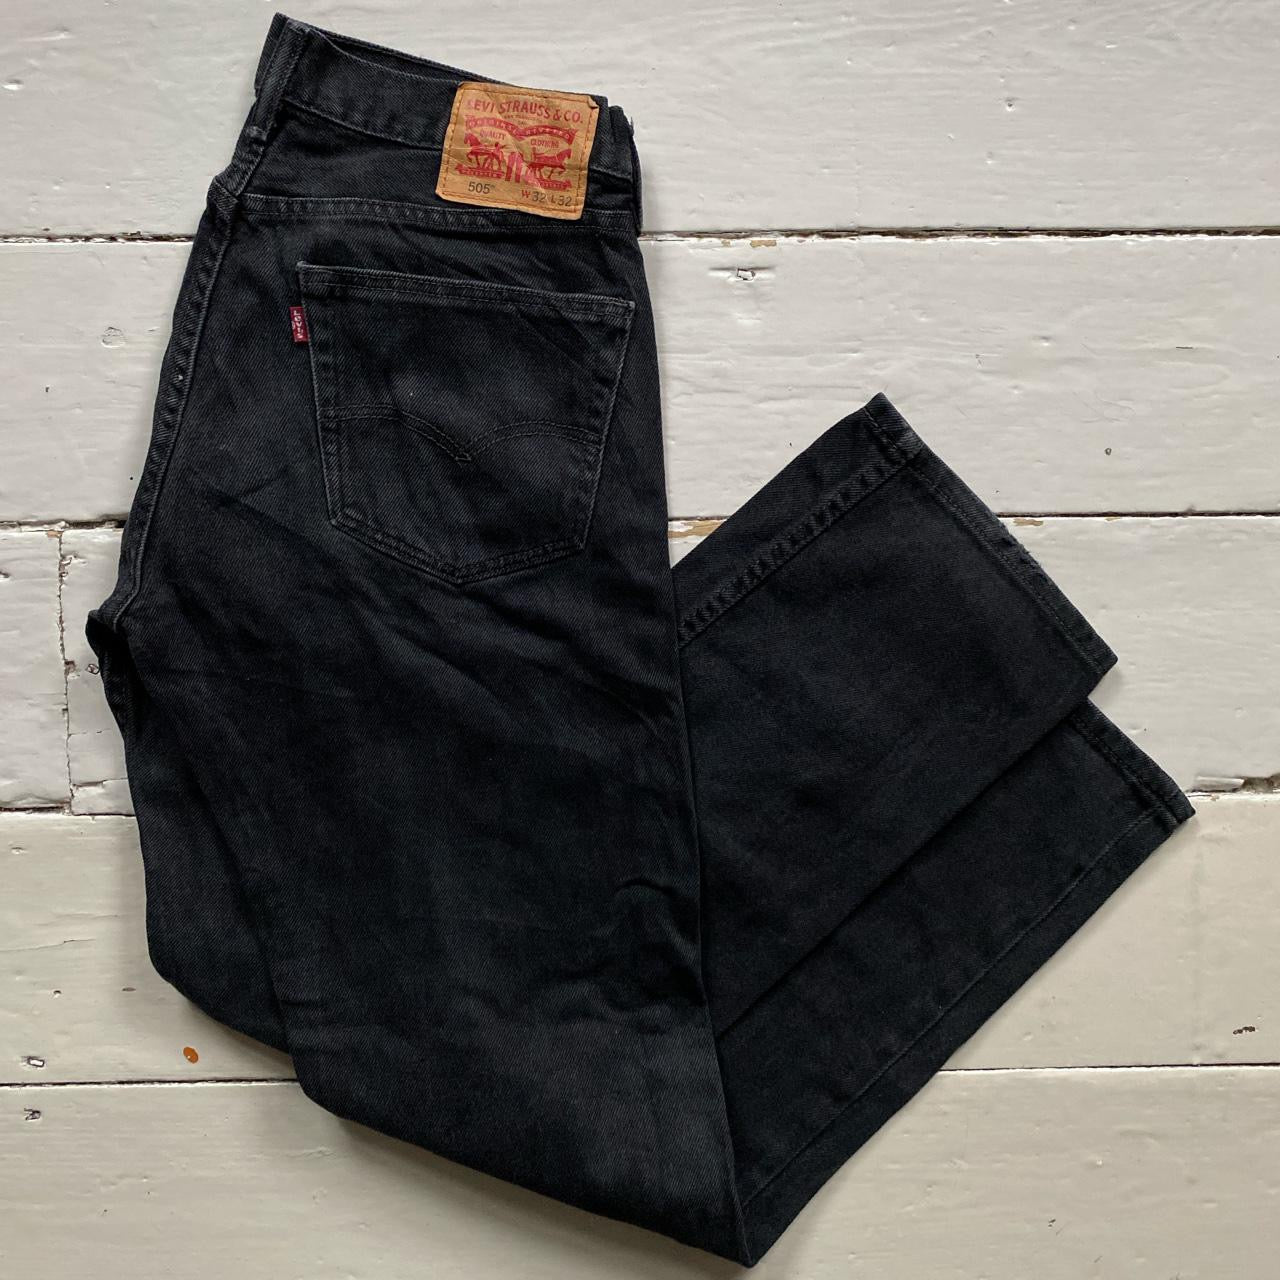 Levis 505 Black Distressed Jeans (32/31)